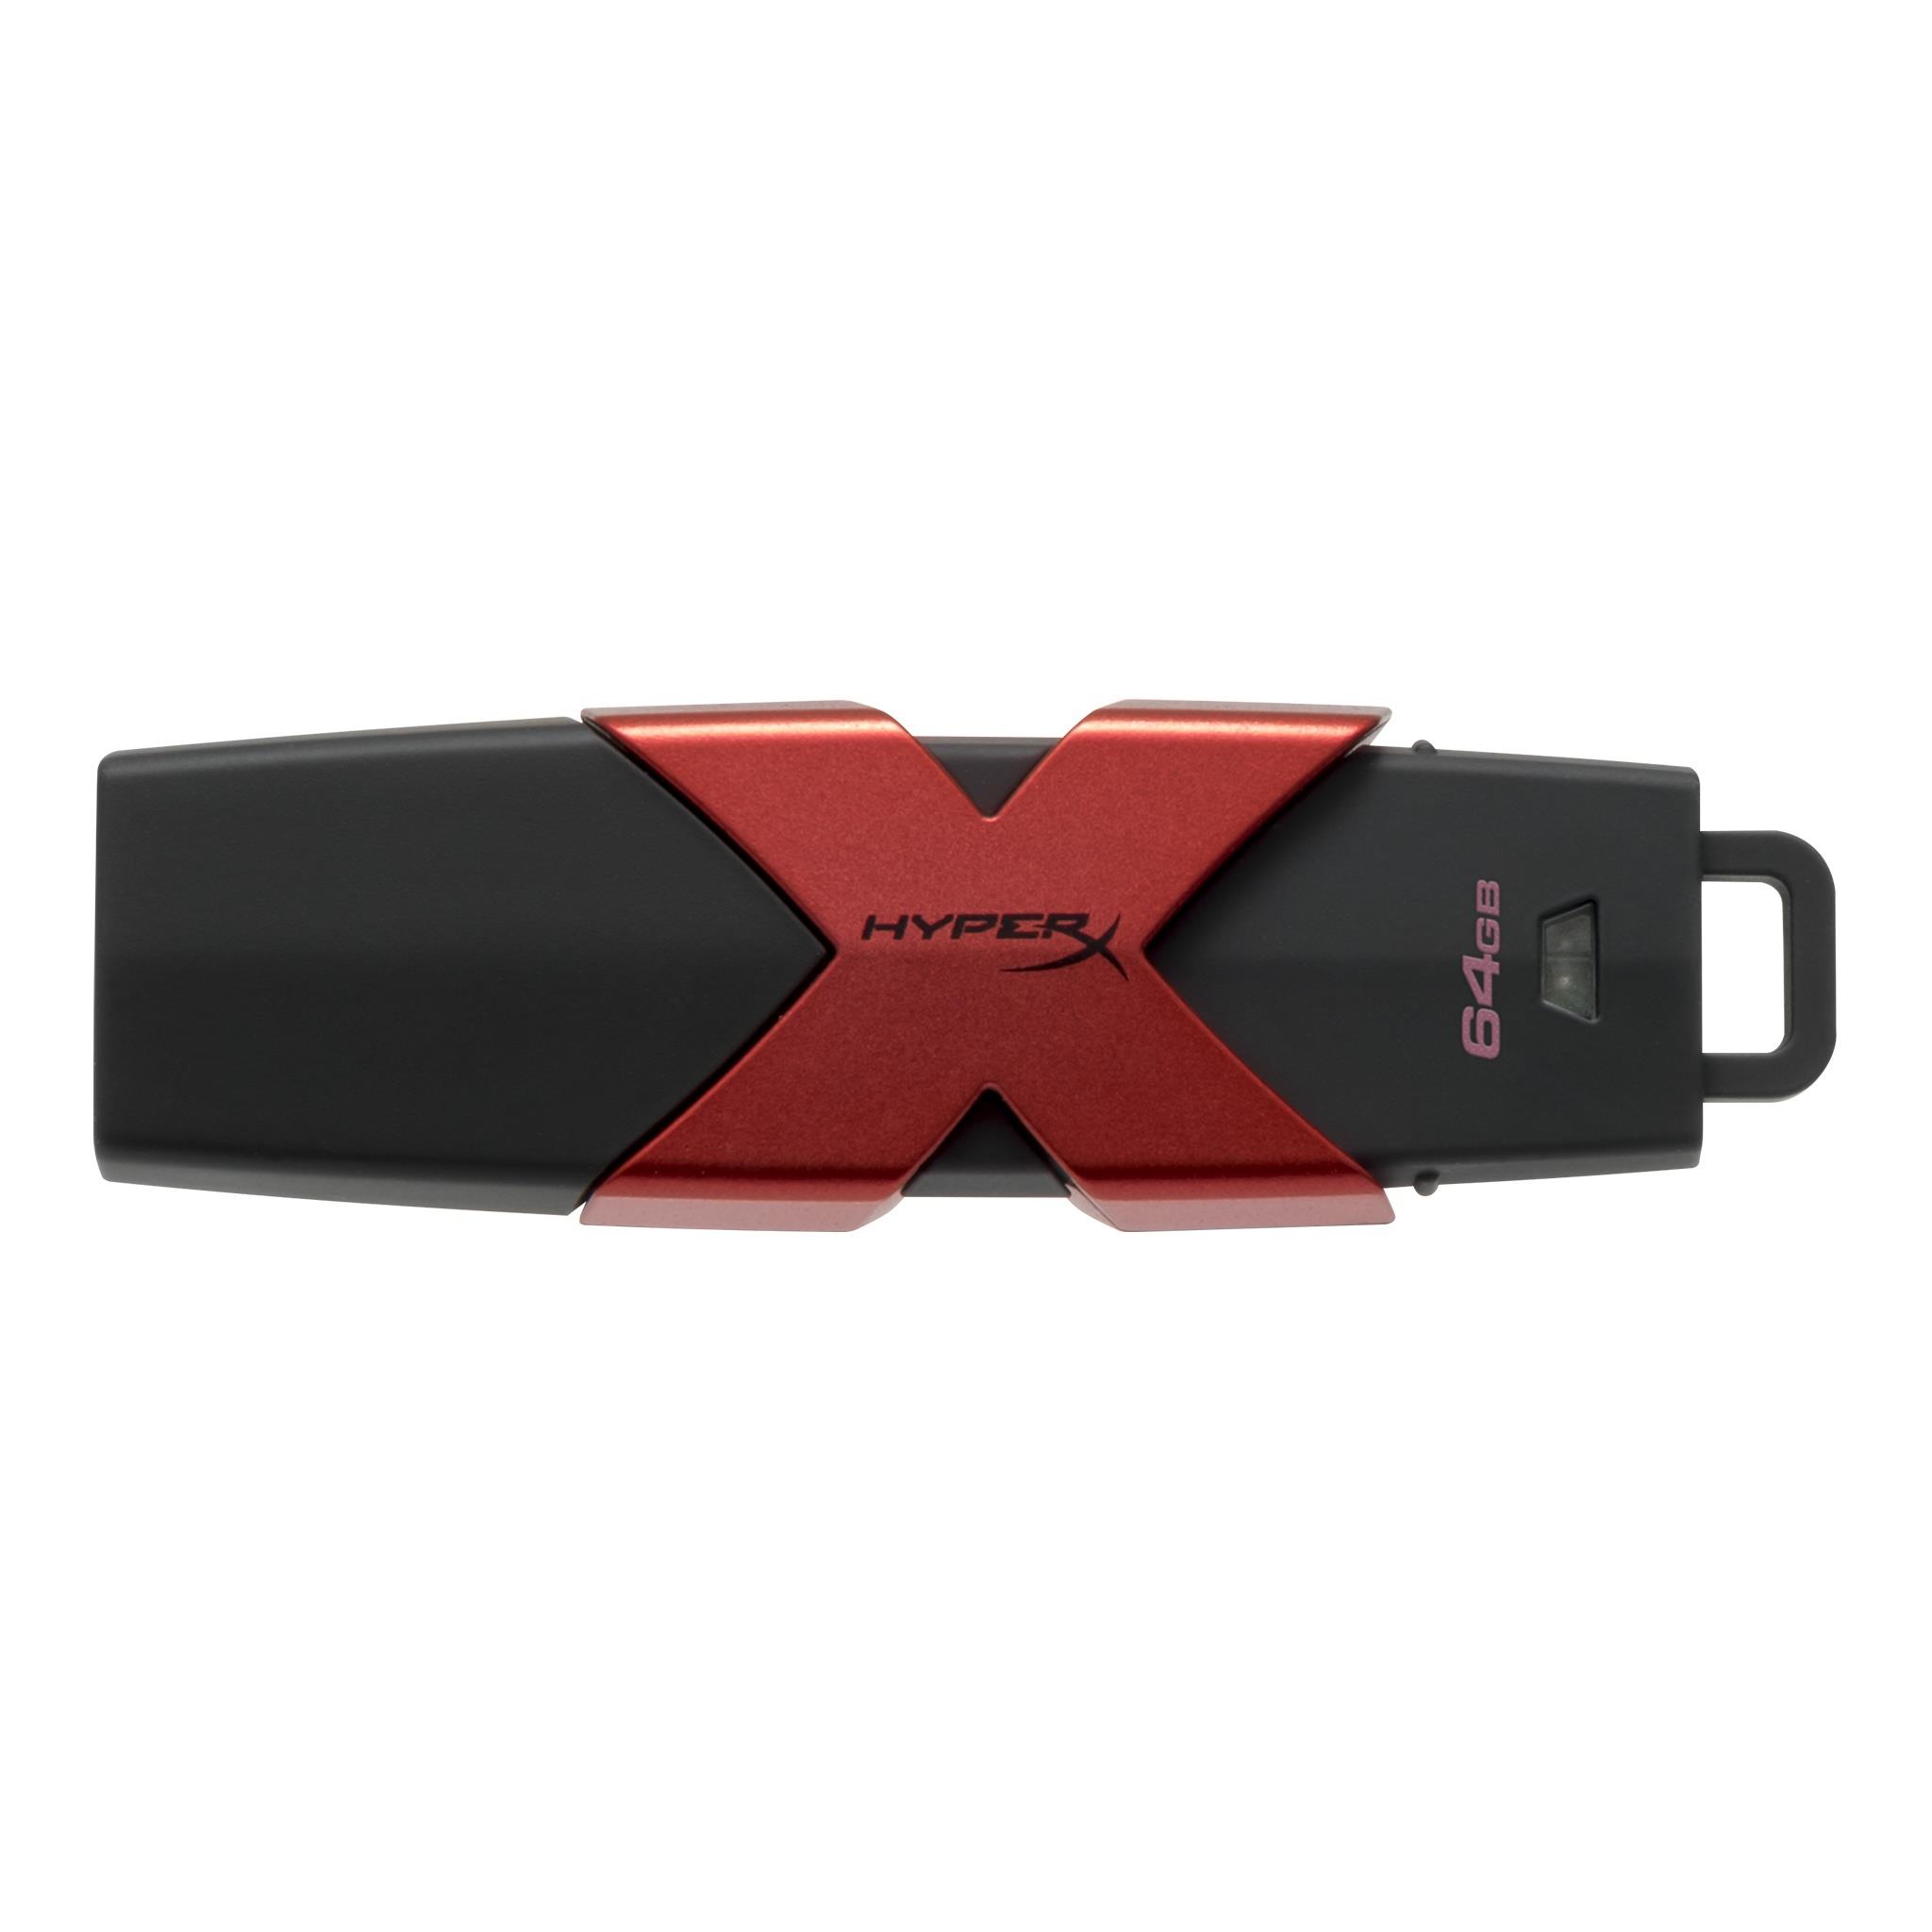 HyperX Savage USB - одна из лучших USB флешек